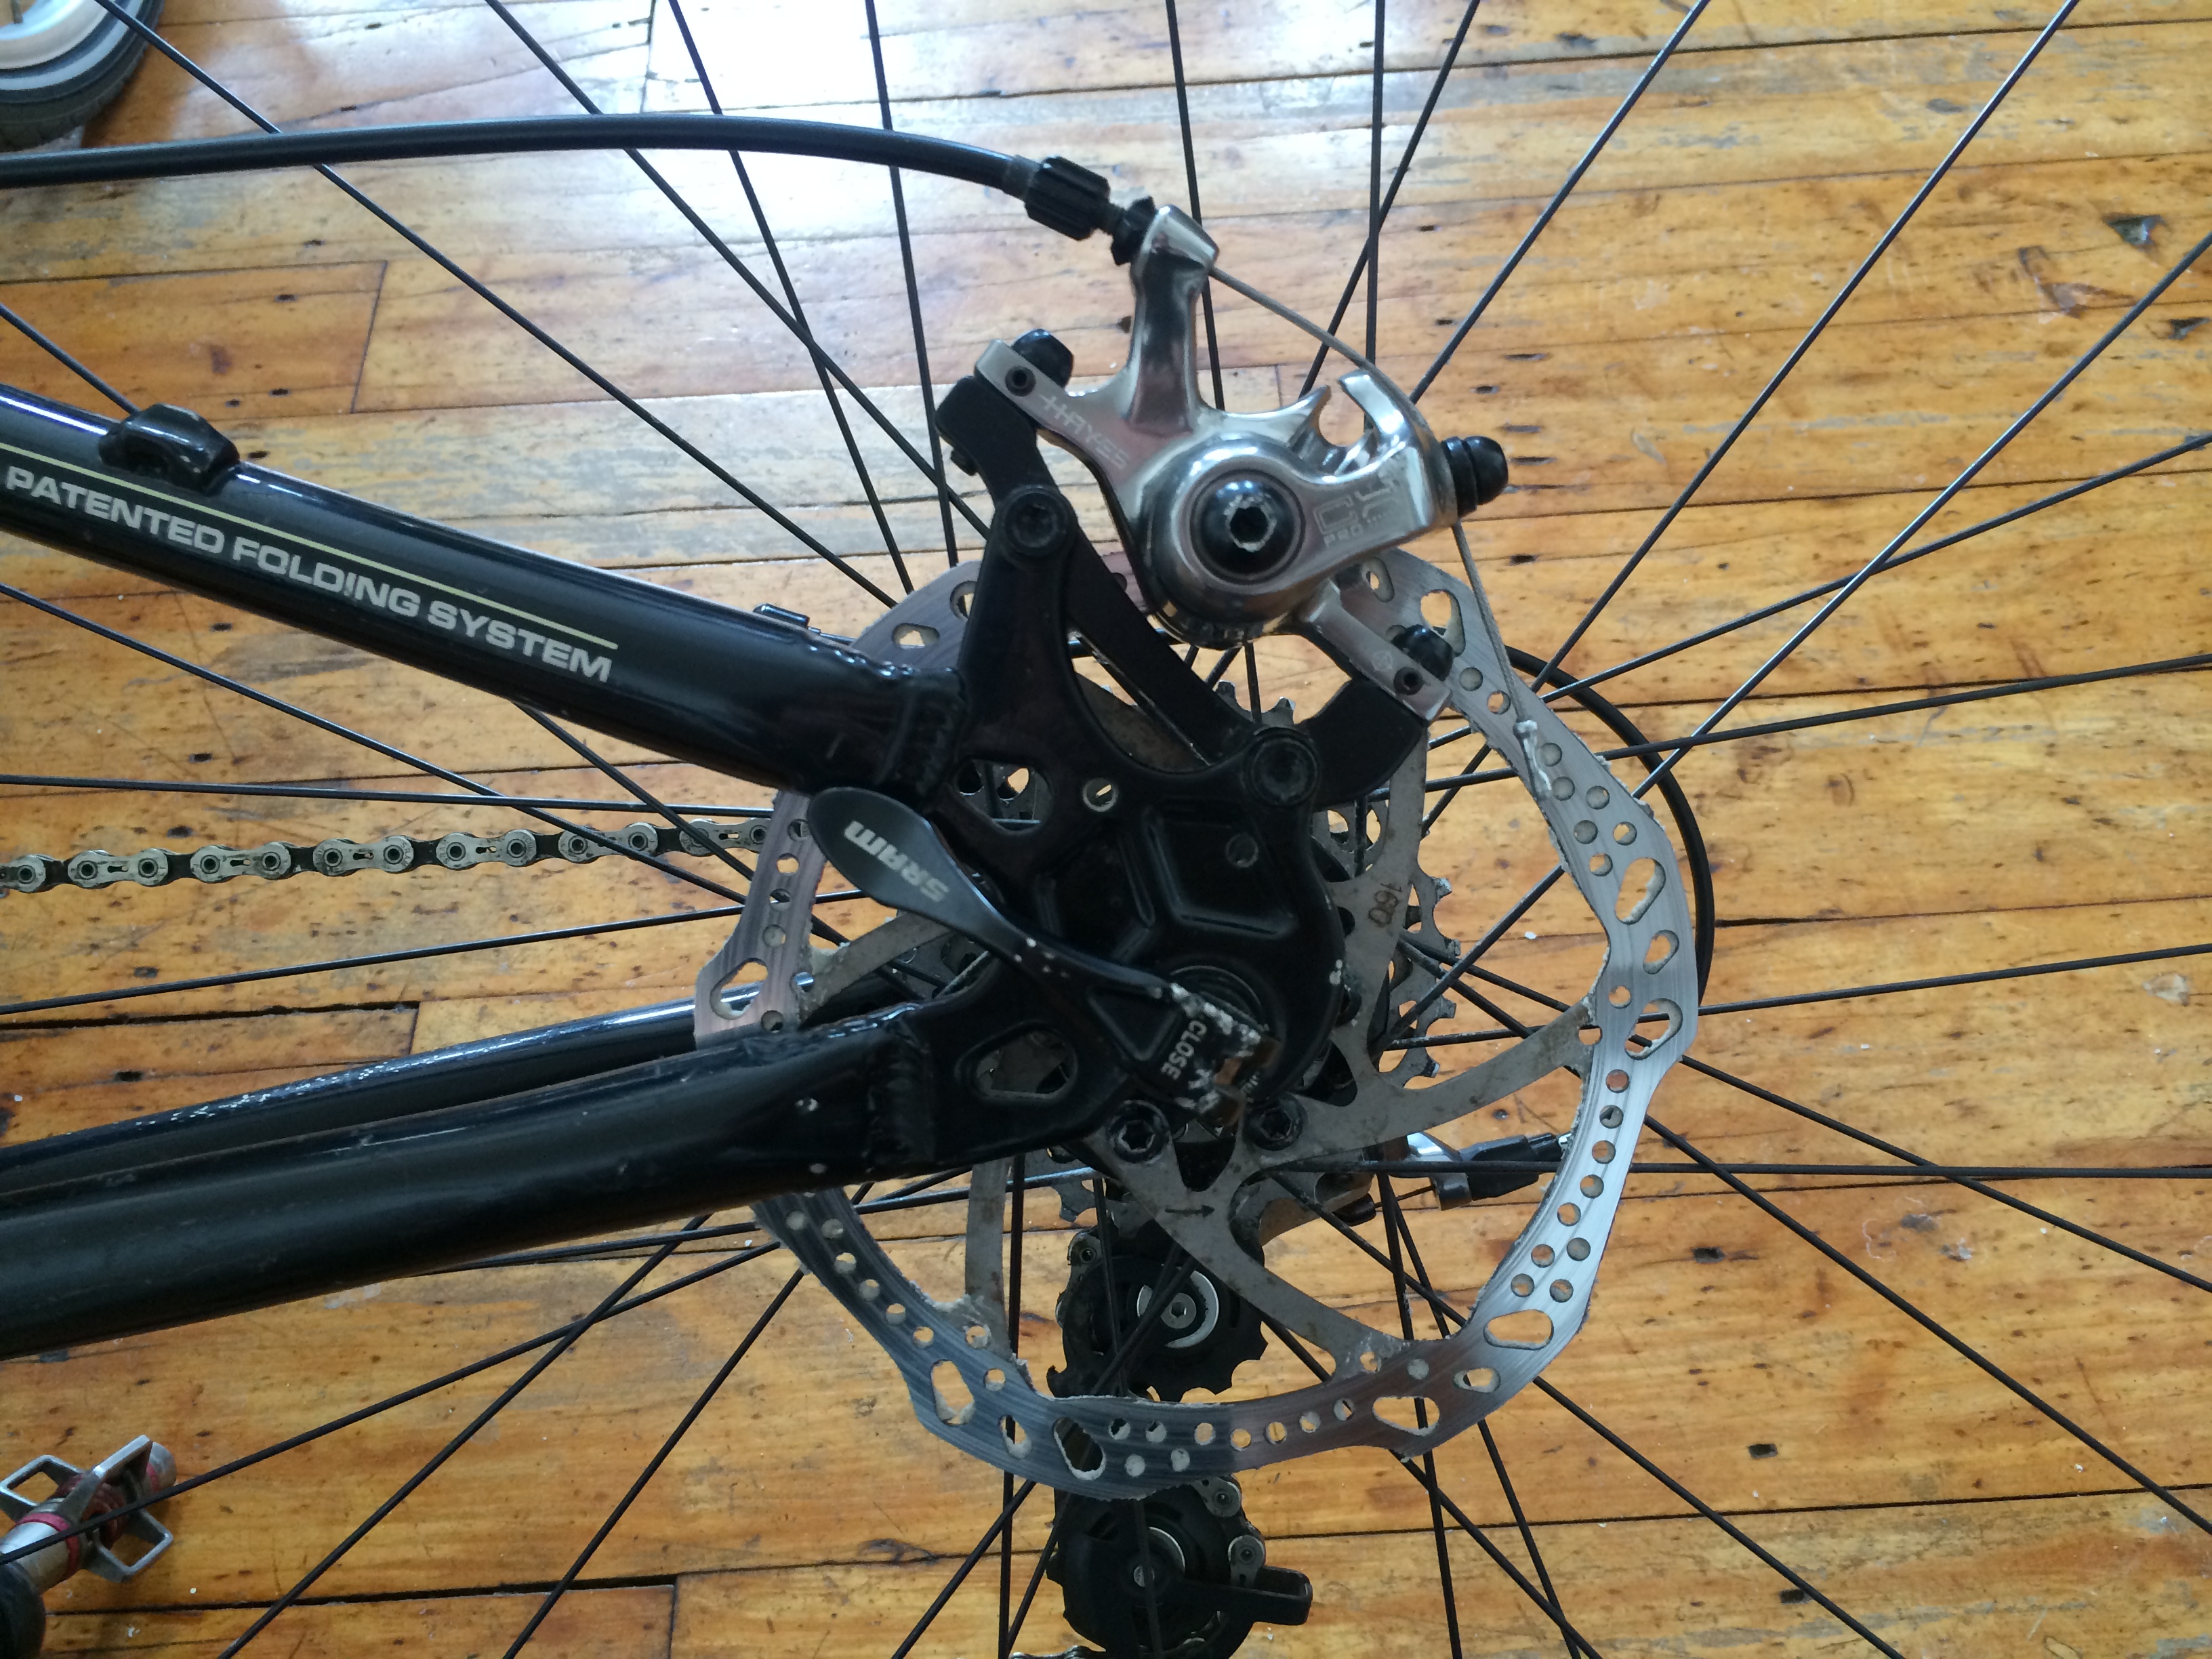 squeaky disc brakes on bike